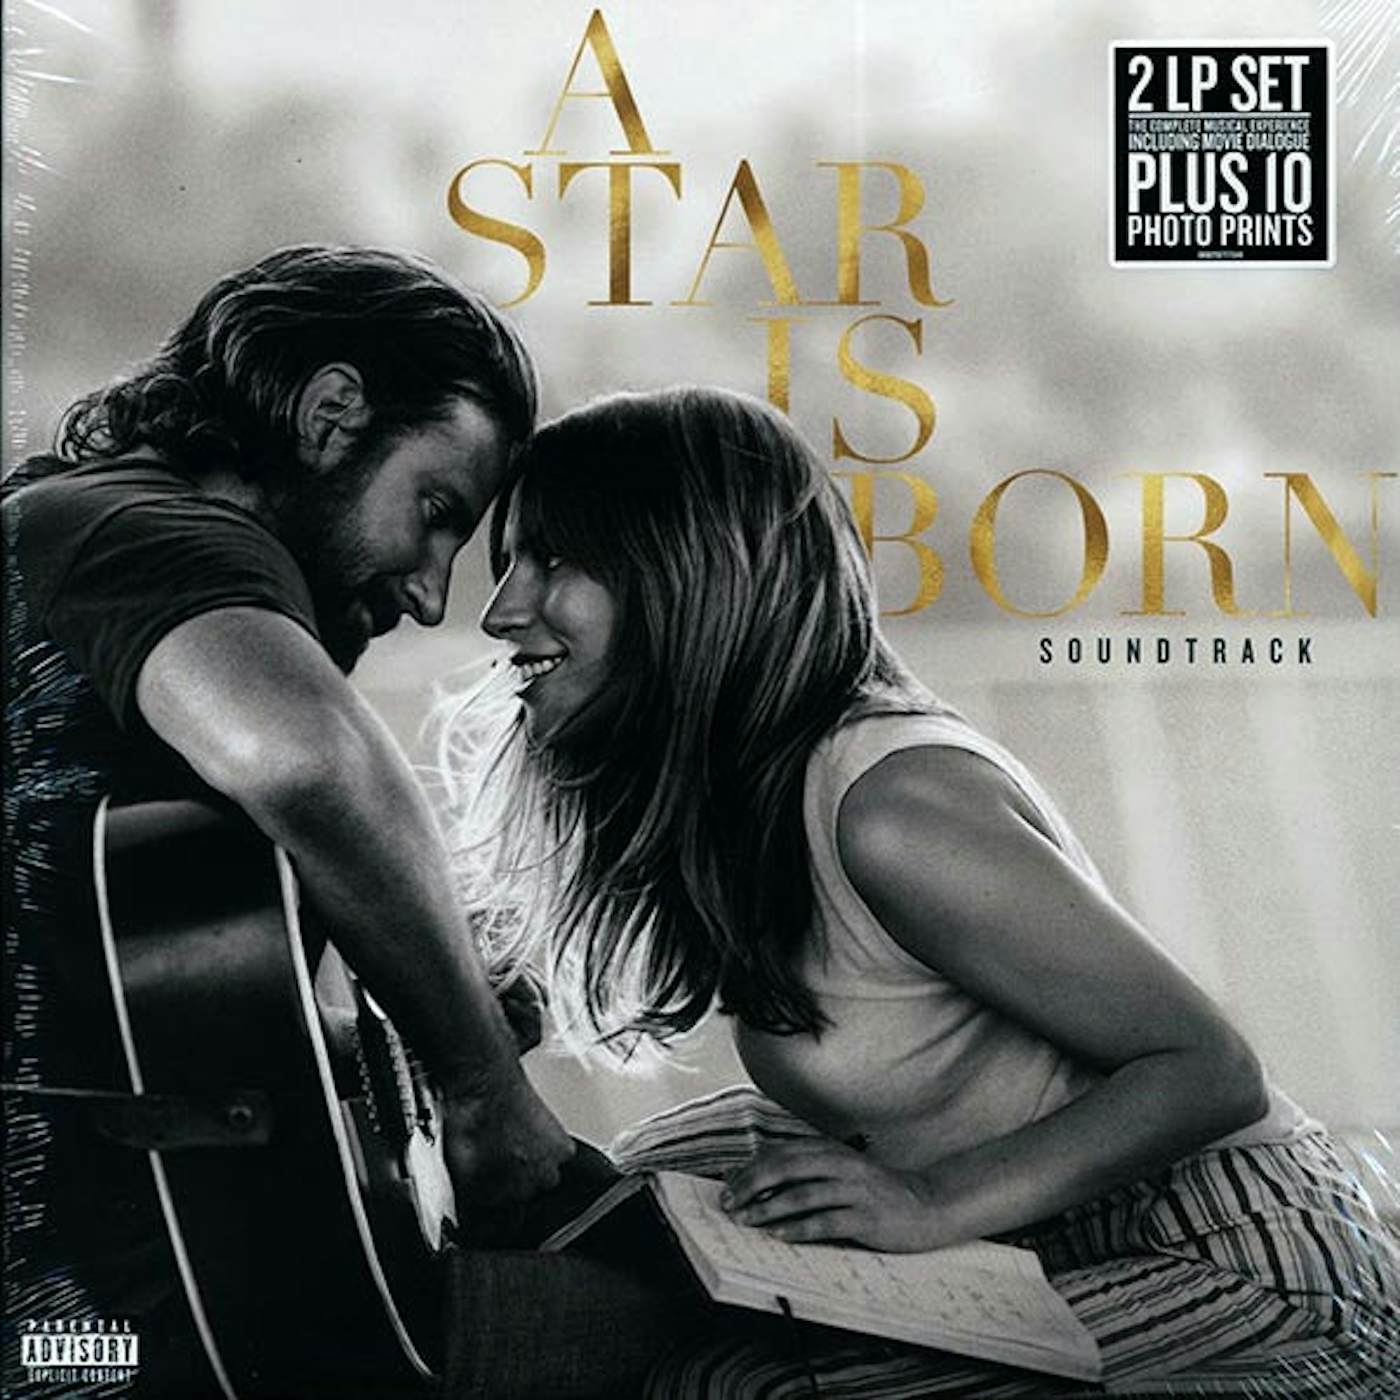 Lady Gaga, Bradley Cooper  LP -  A Star Is Born Soundtrack (34 tracks) (2xLP) (180g) (Vinyl)